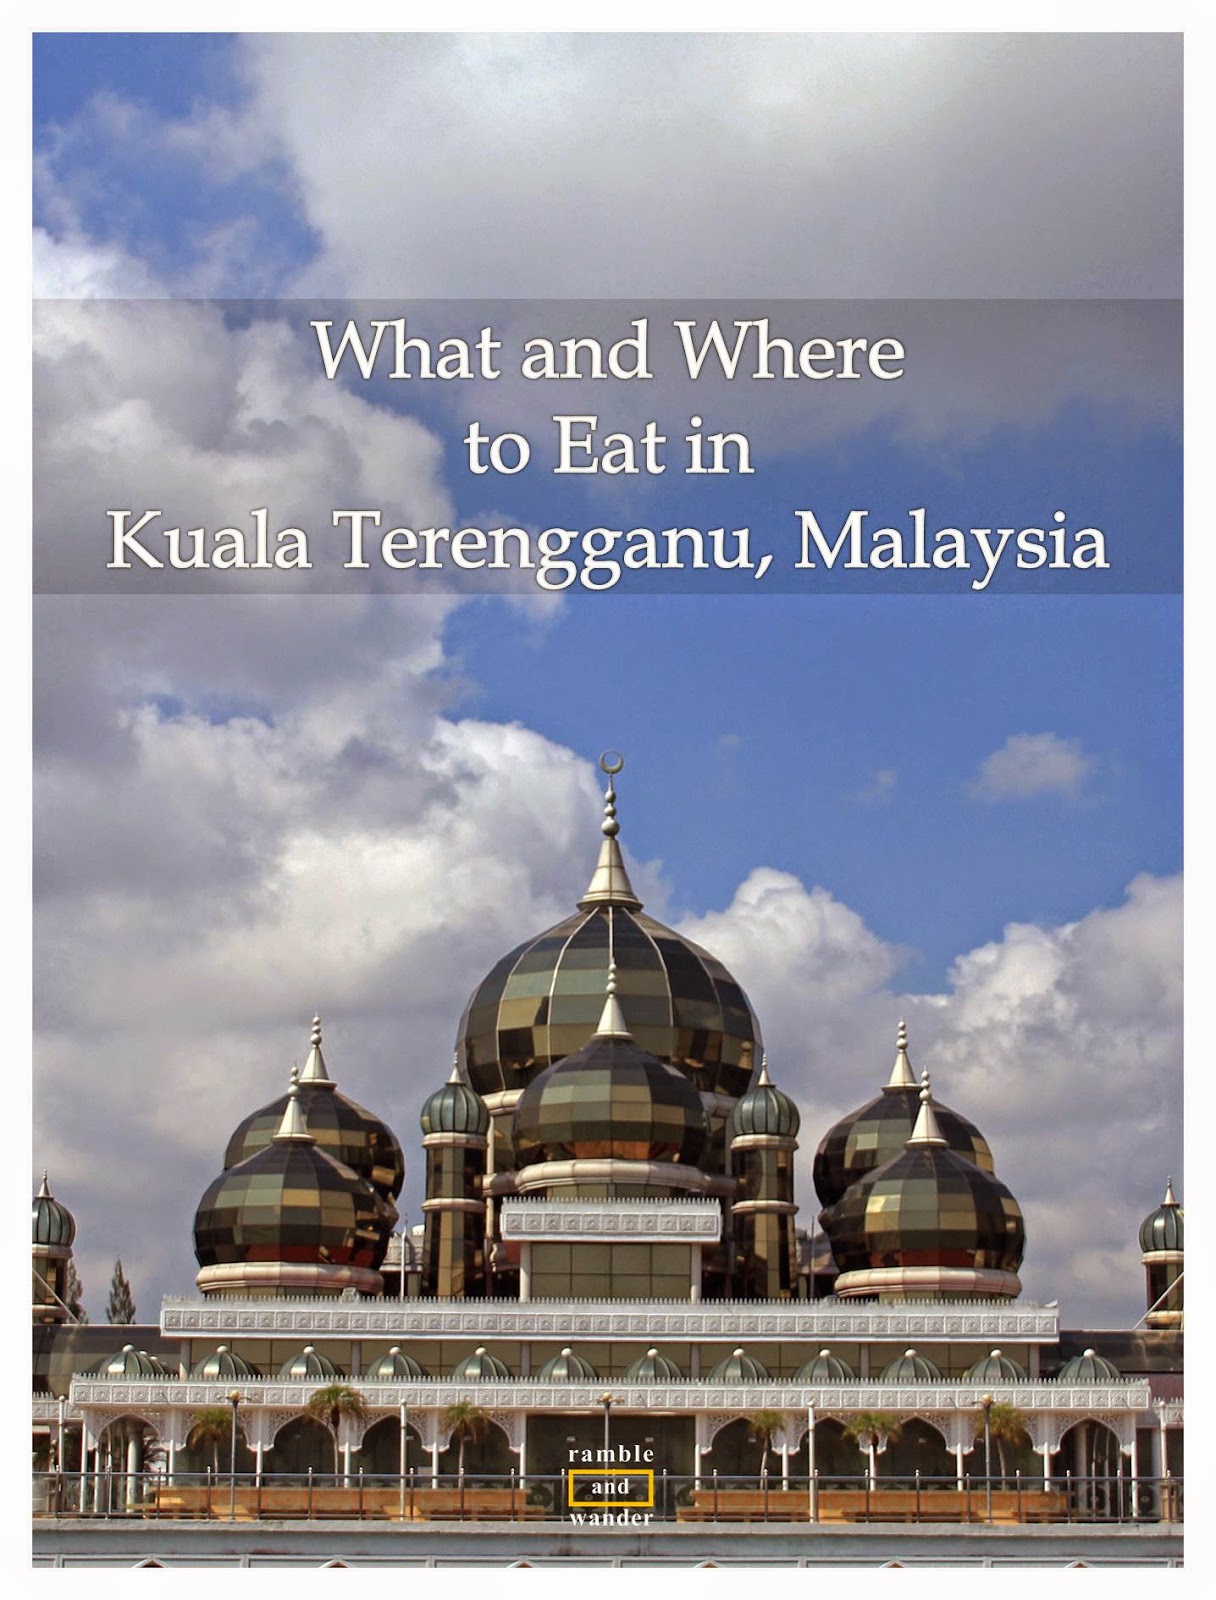 What and Where to Eat in Kuala Terengganu, Malaysia